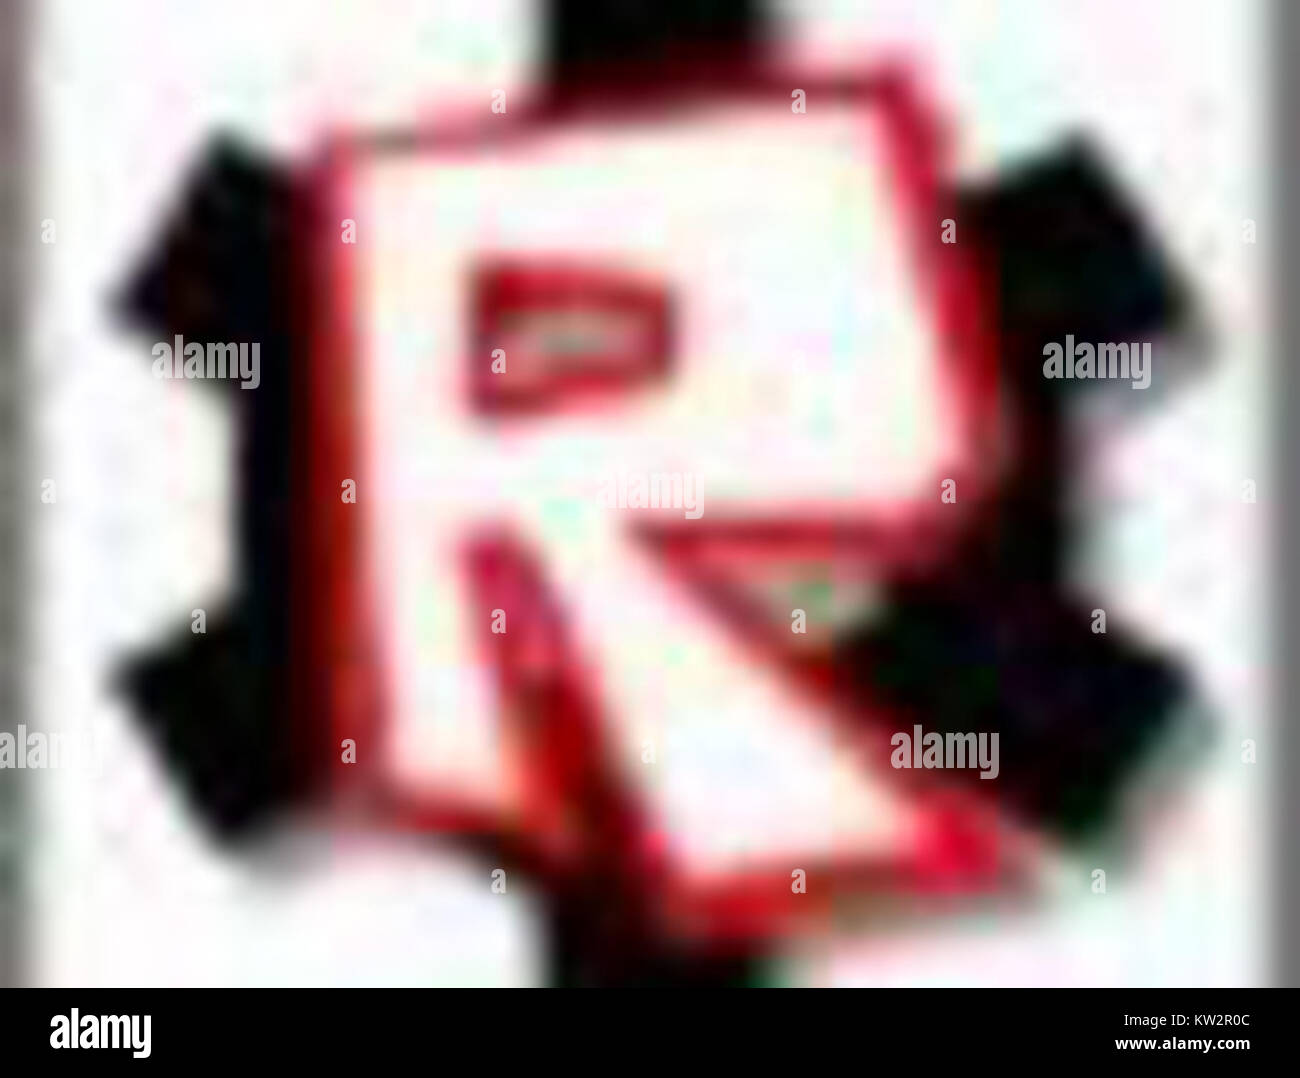 Roblox Logo Brag Stock Photo Alamy - picture of roblox logo